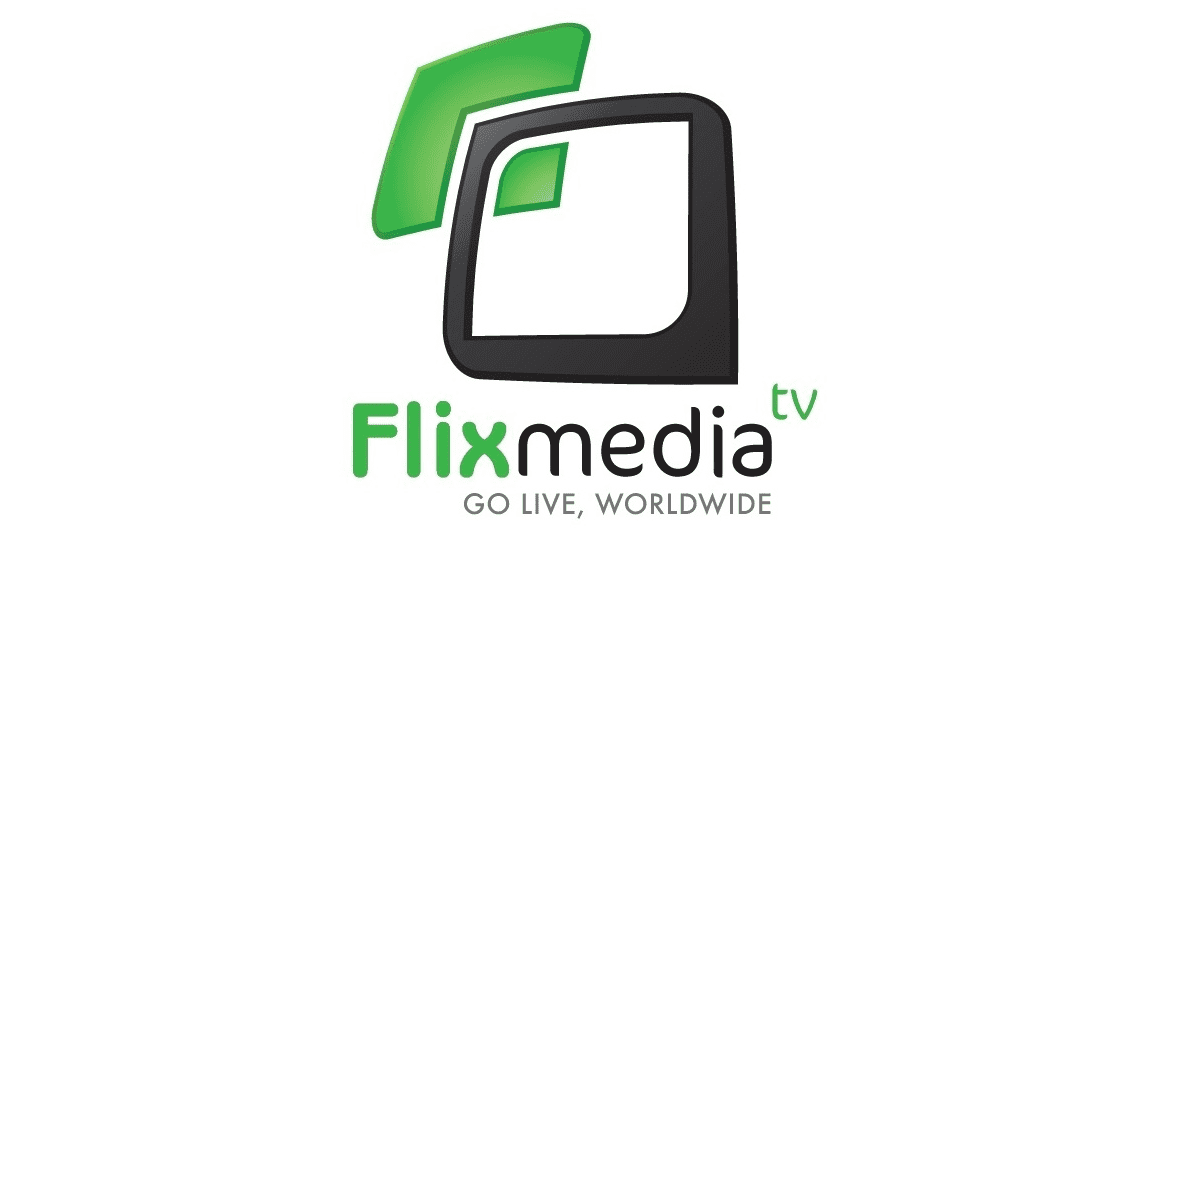 Flixmedia